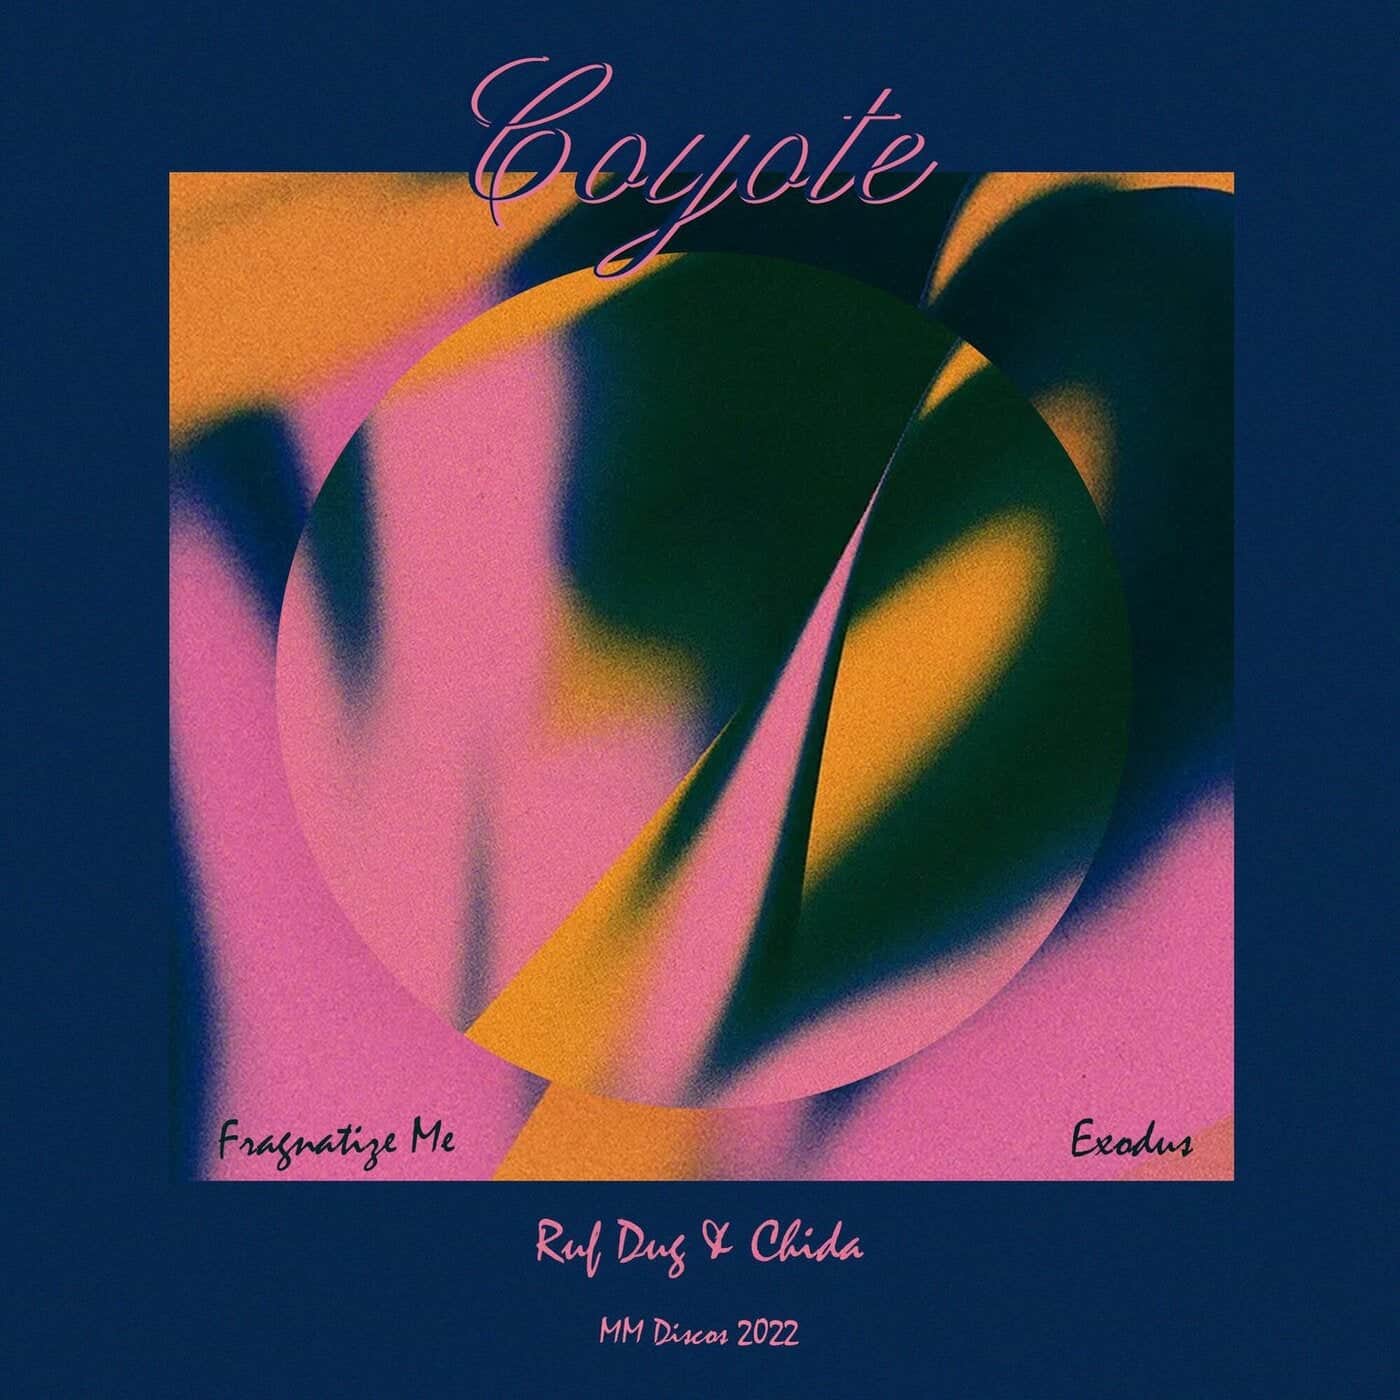 Download Coyote - Exodus / Fragnatize Me (Ruf Dug & Chida Remixes) on Electrobuzz